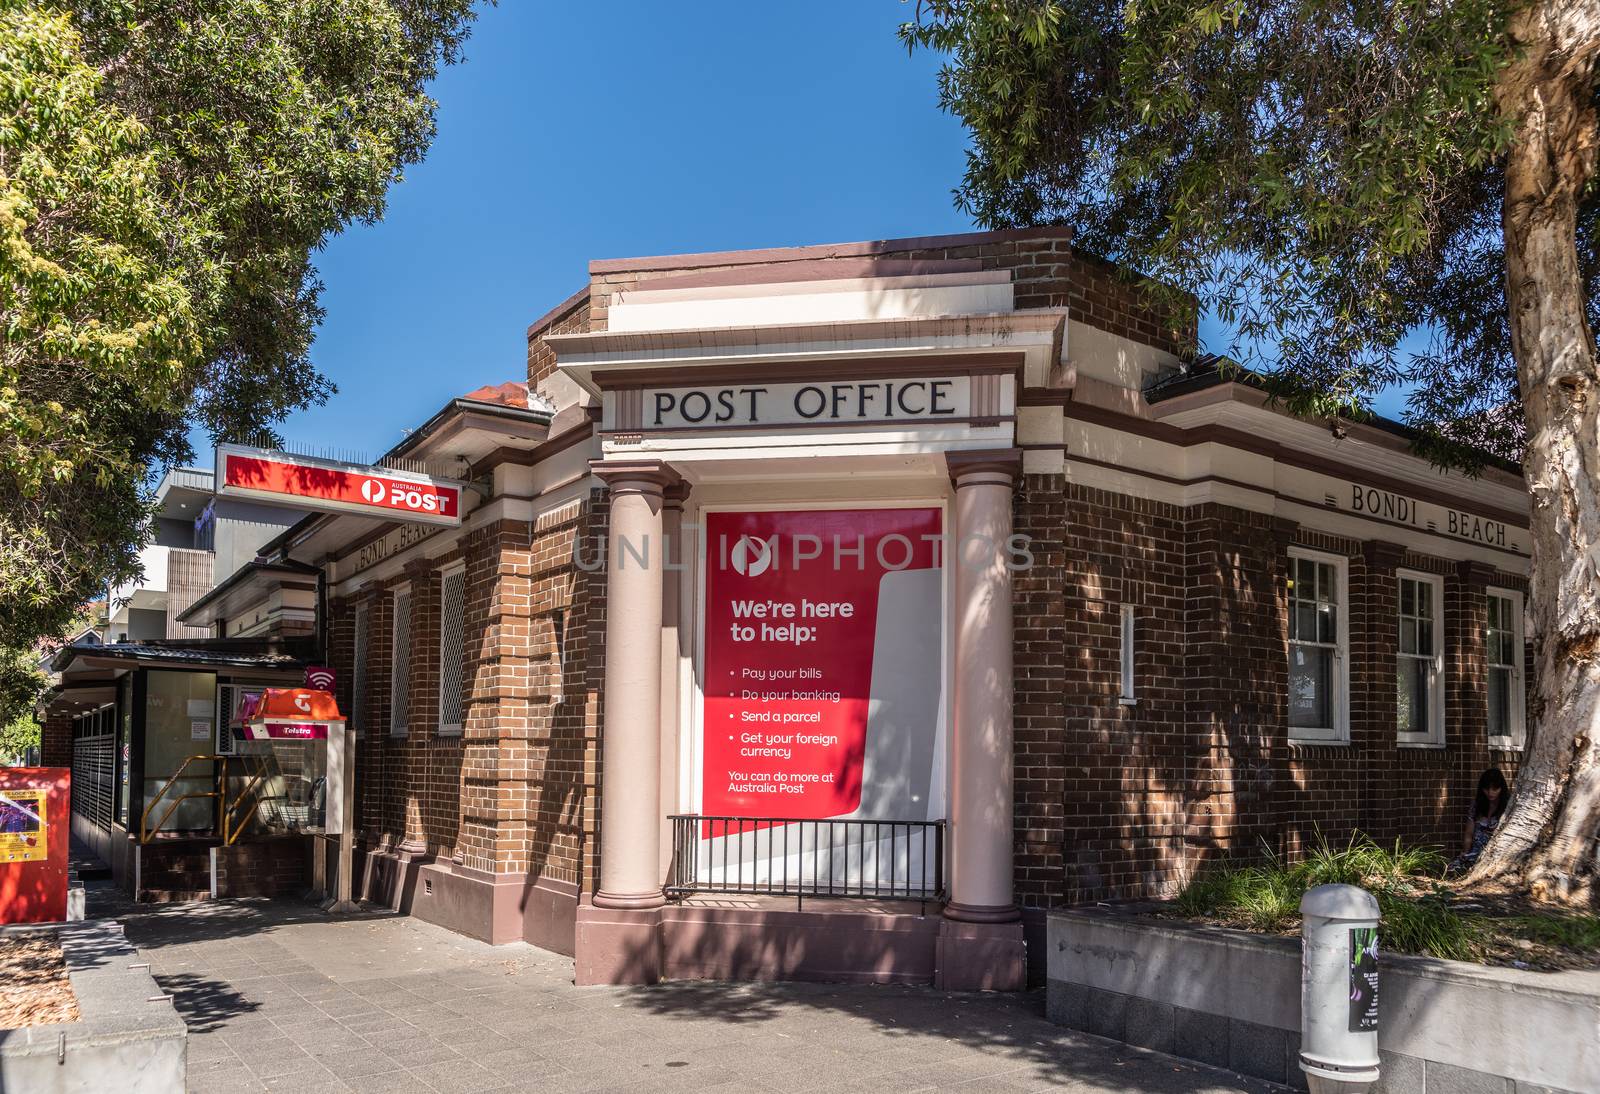 Sydney, Australia - February 11, 2019: Post Office building of Bondi Beach. Street scene with green vegetation. White on red advertisements on columned facade.